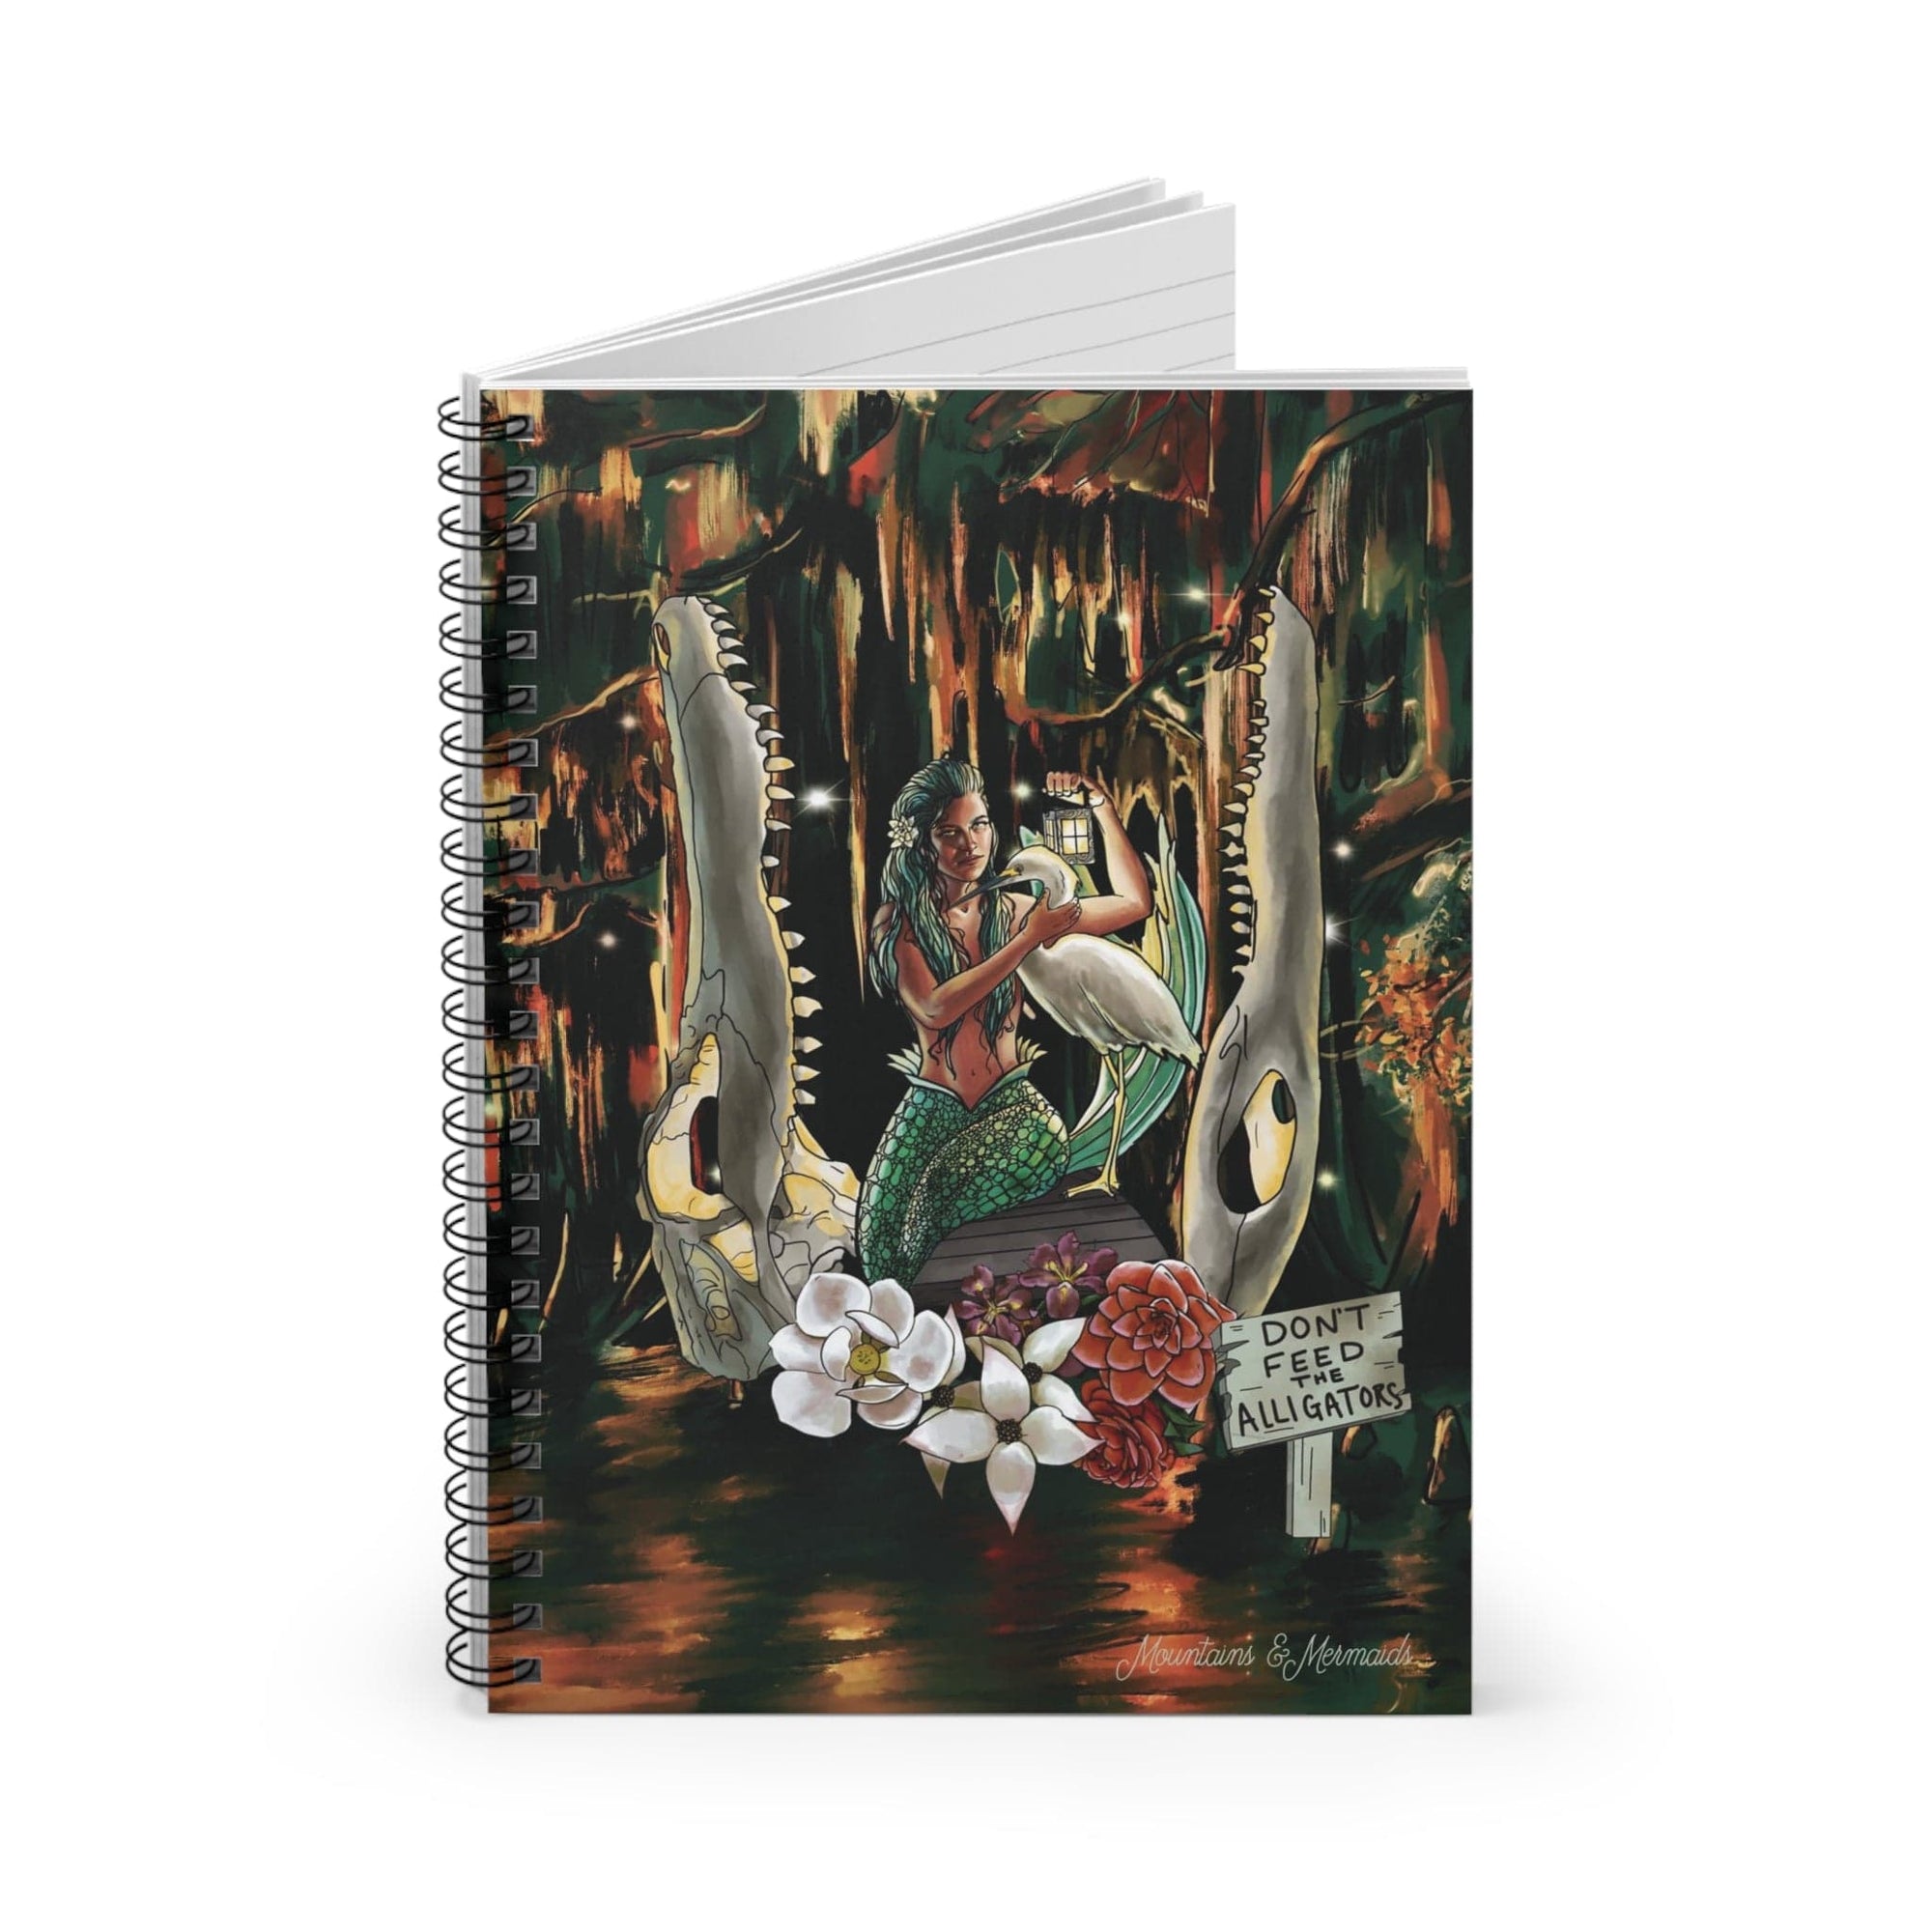 Bayou Mermaid Spiral Notebook - Ruled Line - Mountains & Mermaids